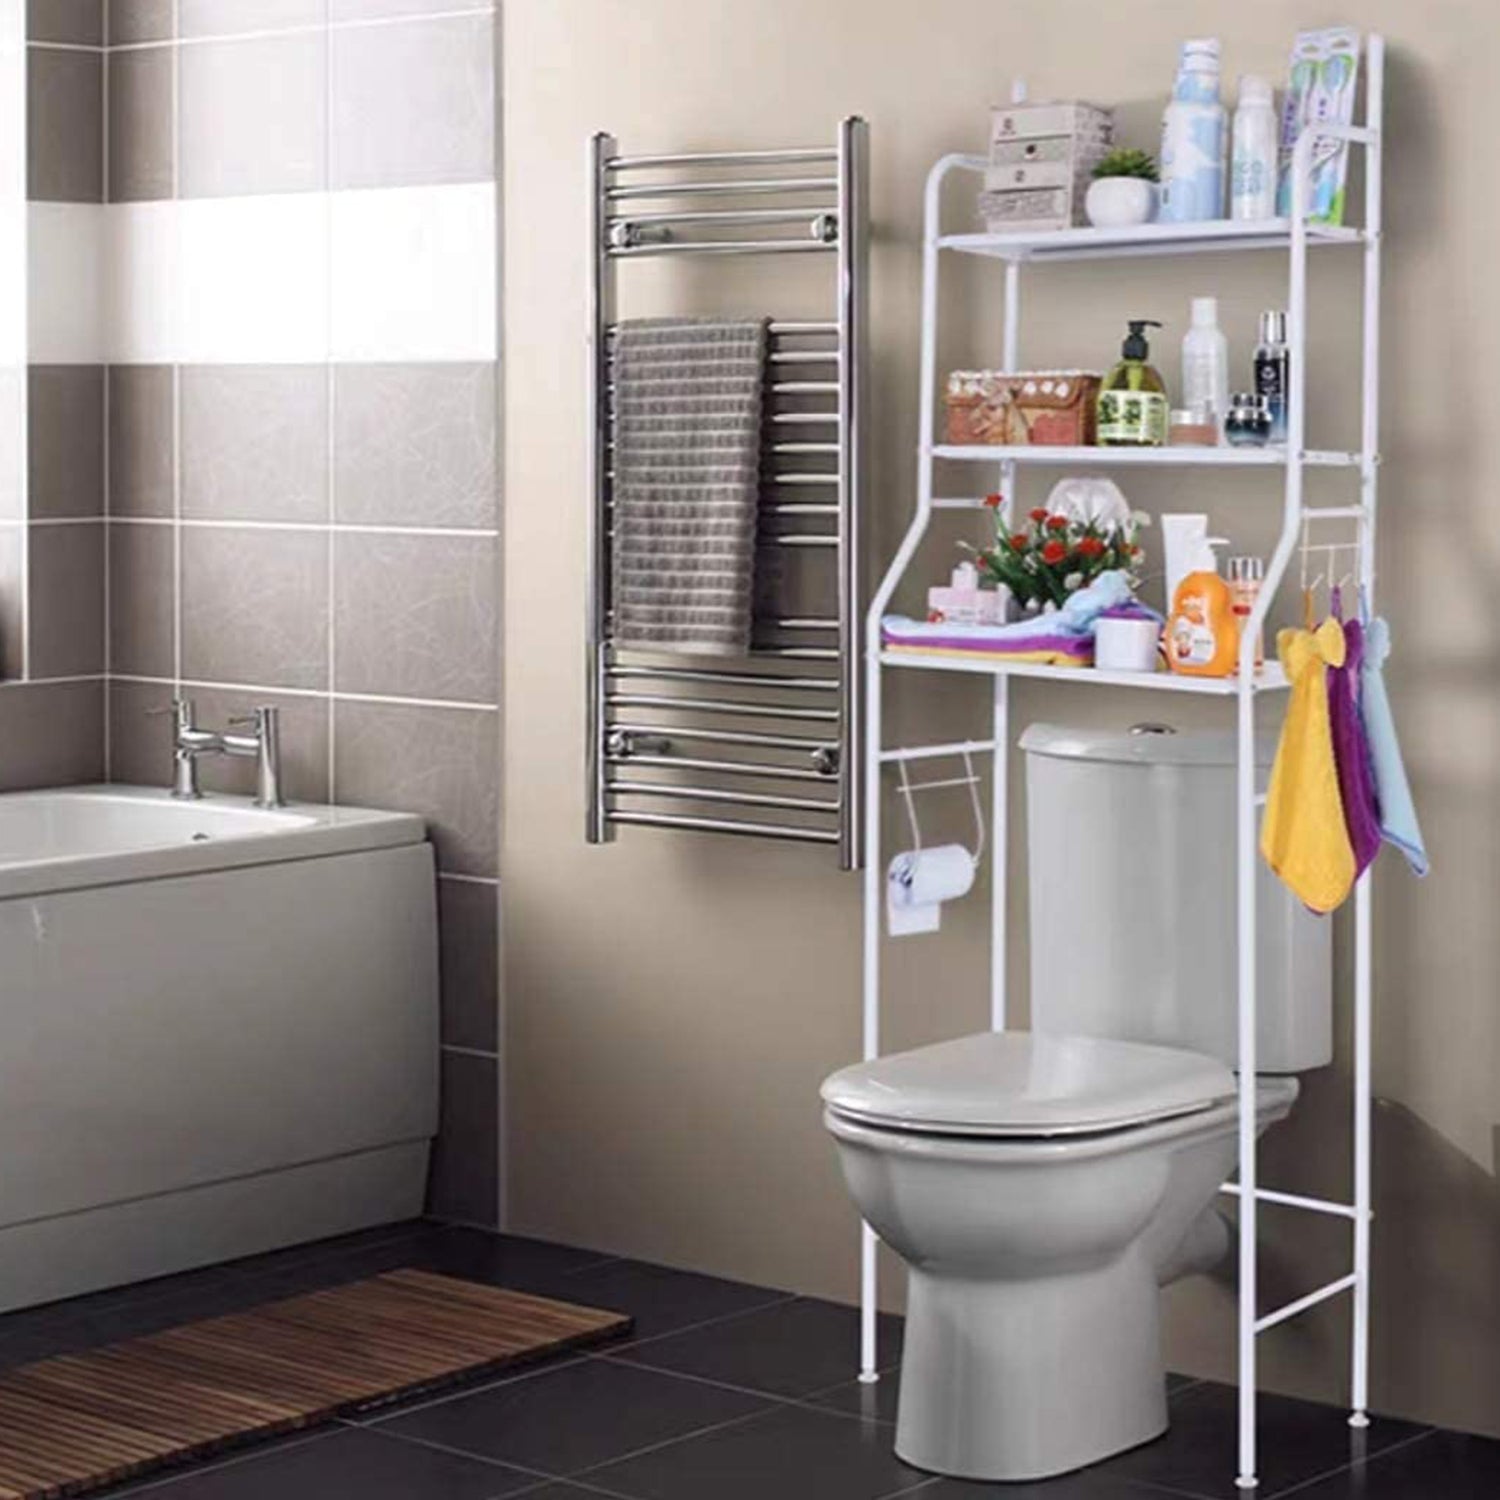 8803 Multi-Layer The Toilet Storage Rack Metal | Bathroom Shelf Space Saving Organizer for Laundry Room Wash Basin Floor Stand